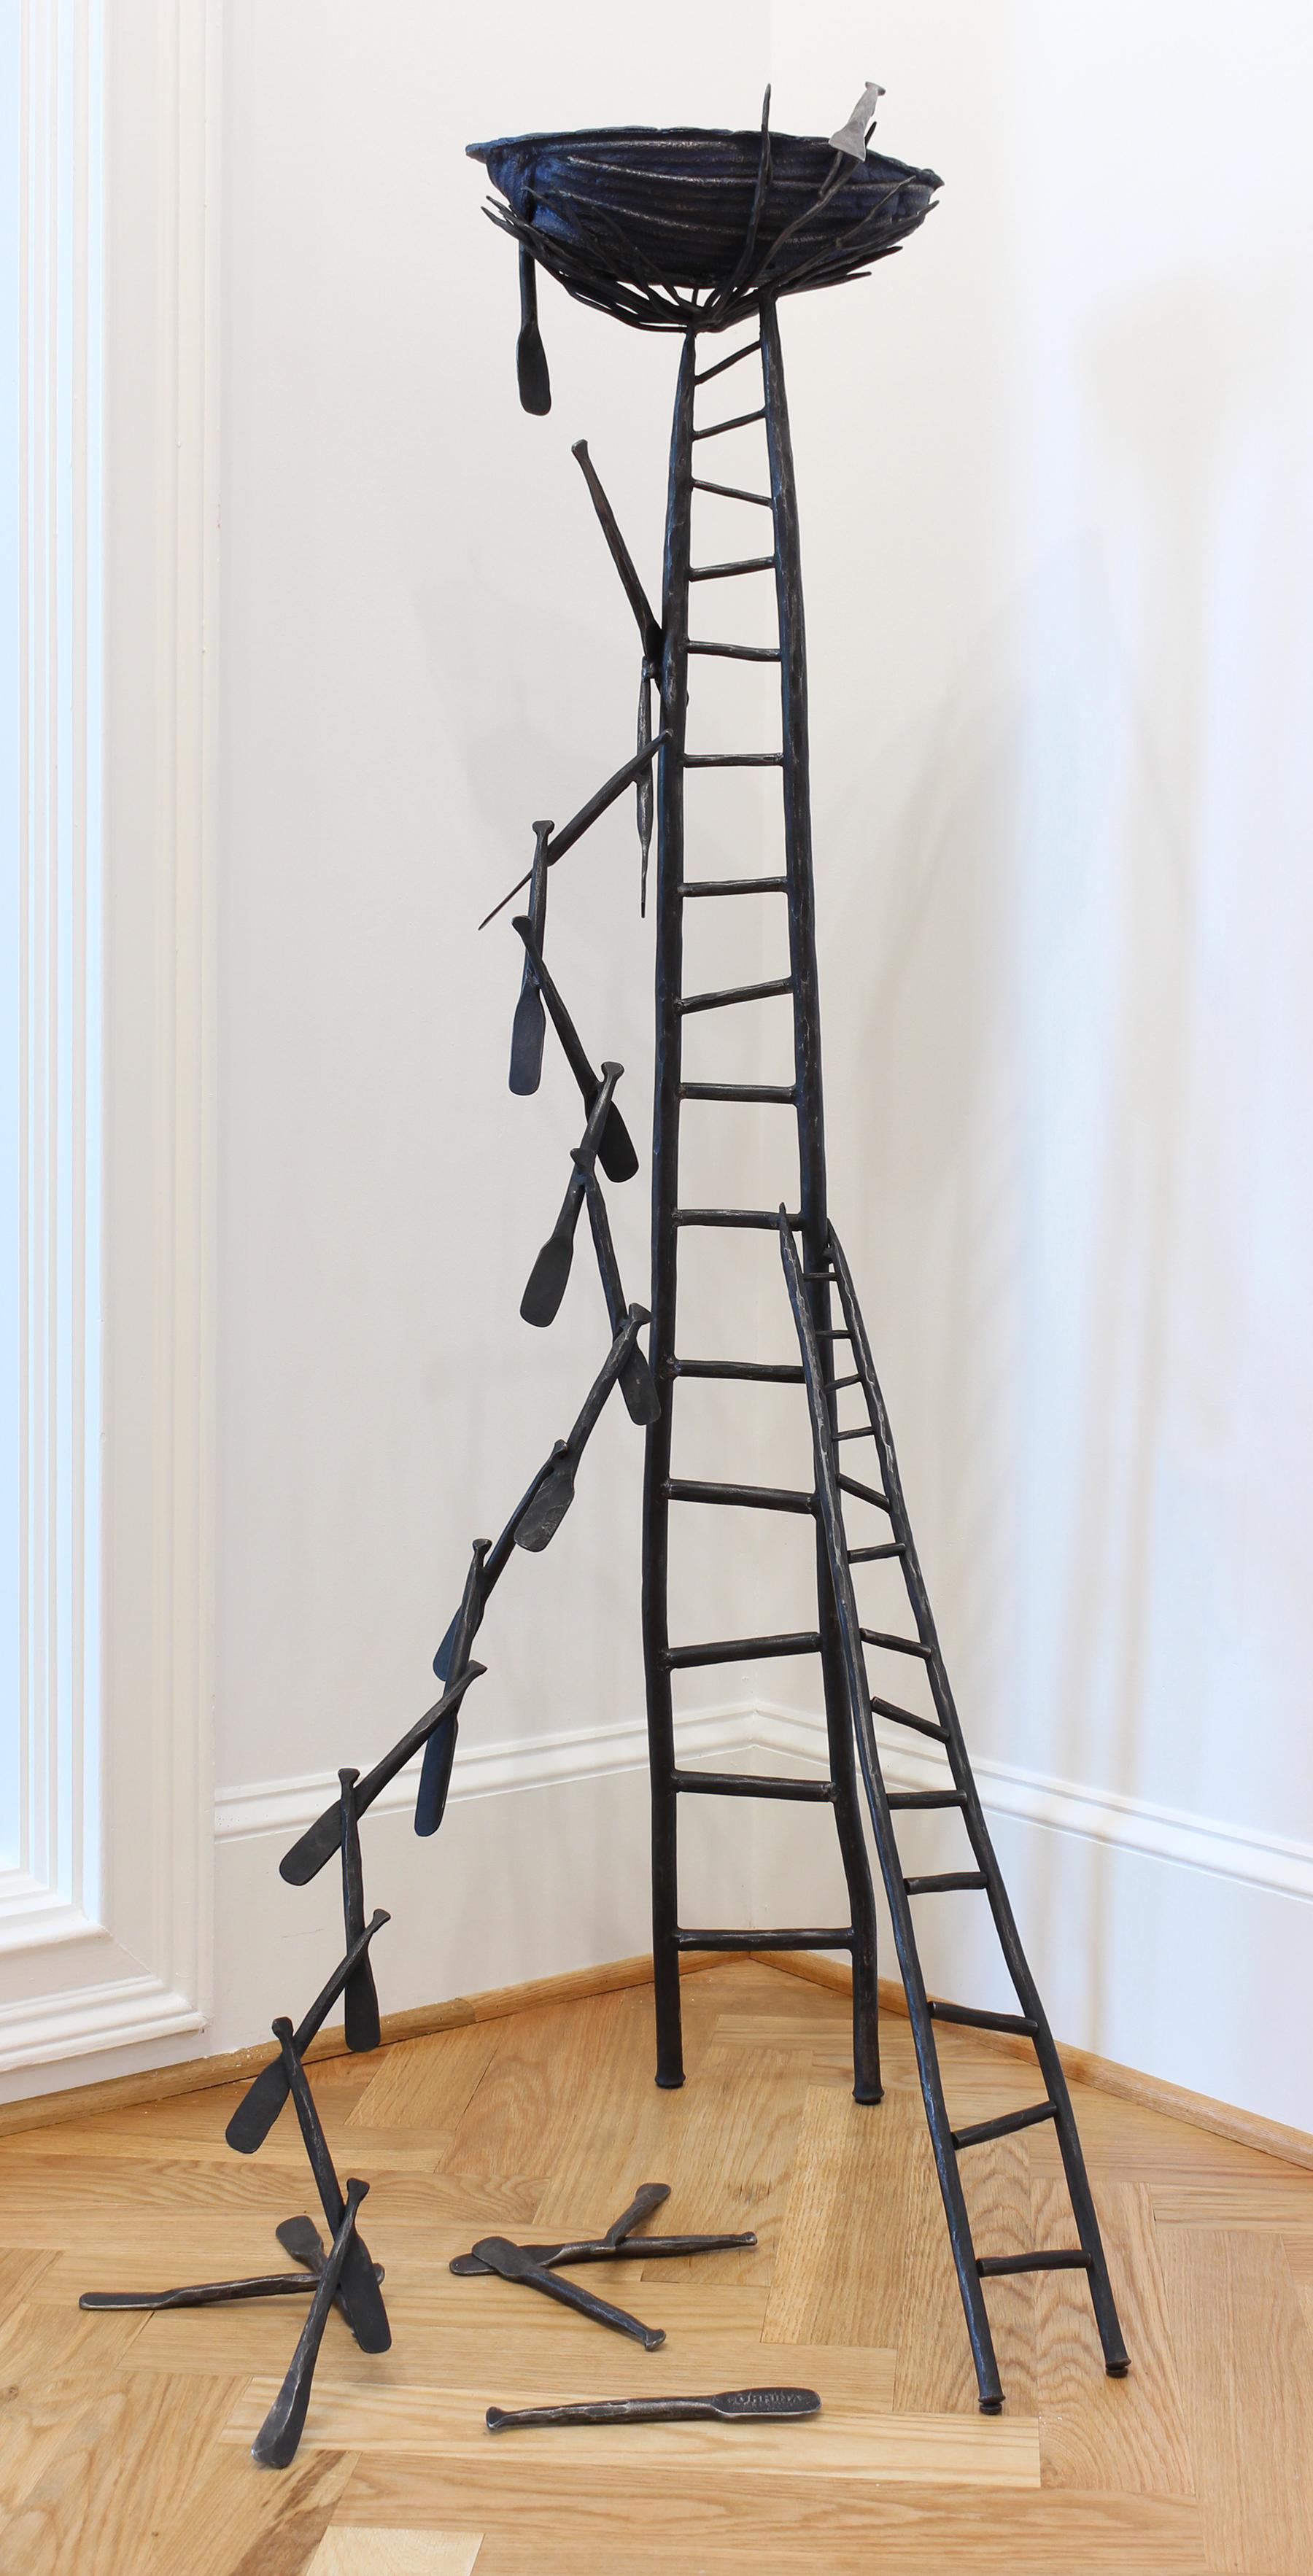 Corrina Sephora Abstract Sculpture - "Curious Dreamer" - surrealist iron sculpture, ladder, nautical - Nevelson